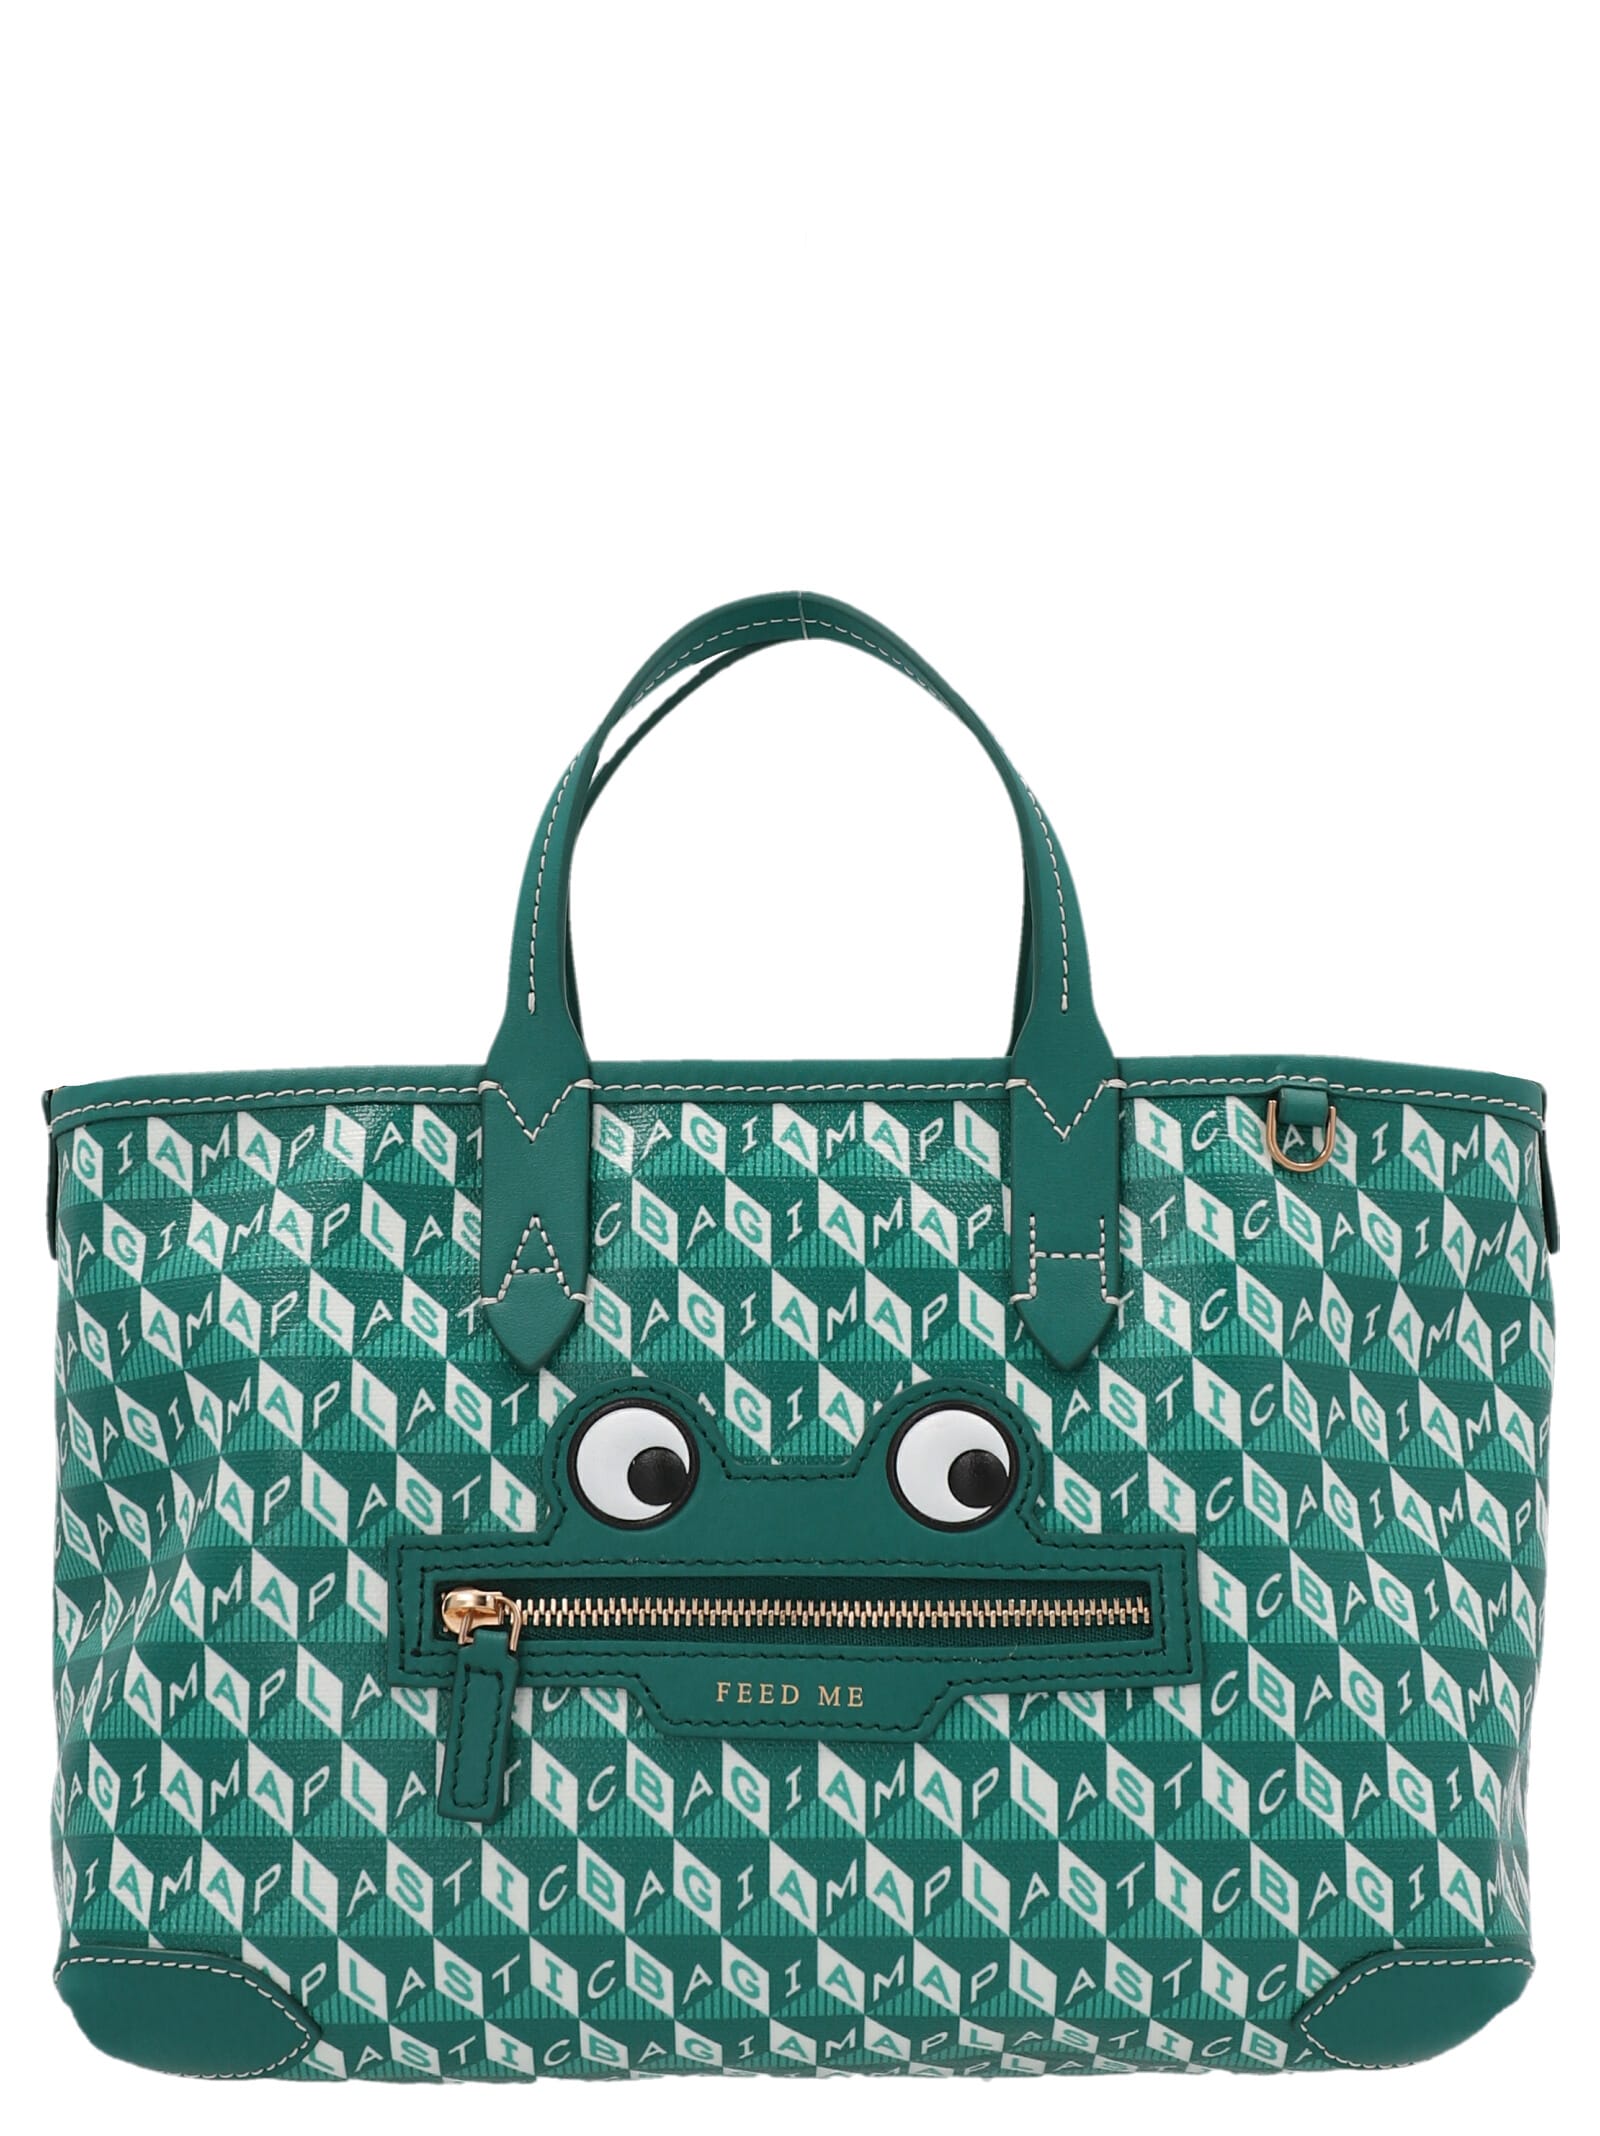 Anya Hindmarch i Am A Plastic Bag Shopping Bag